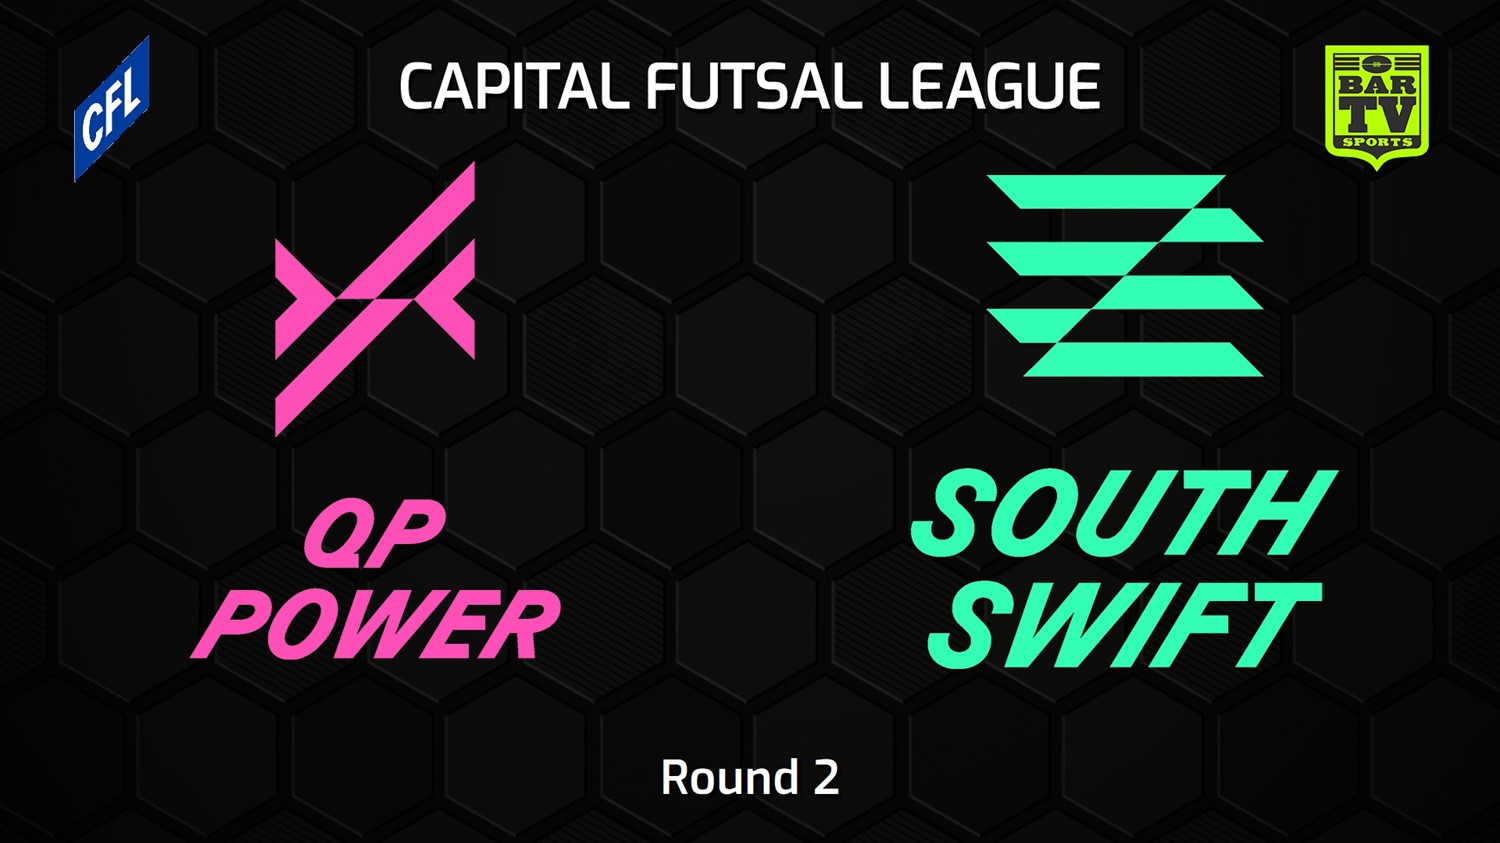 221104-Capital Football Futsal Round 2 - Men's - Queanbeyan-Palerang Power v South Canberra Swifts Minigame Slate Image